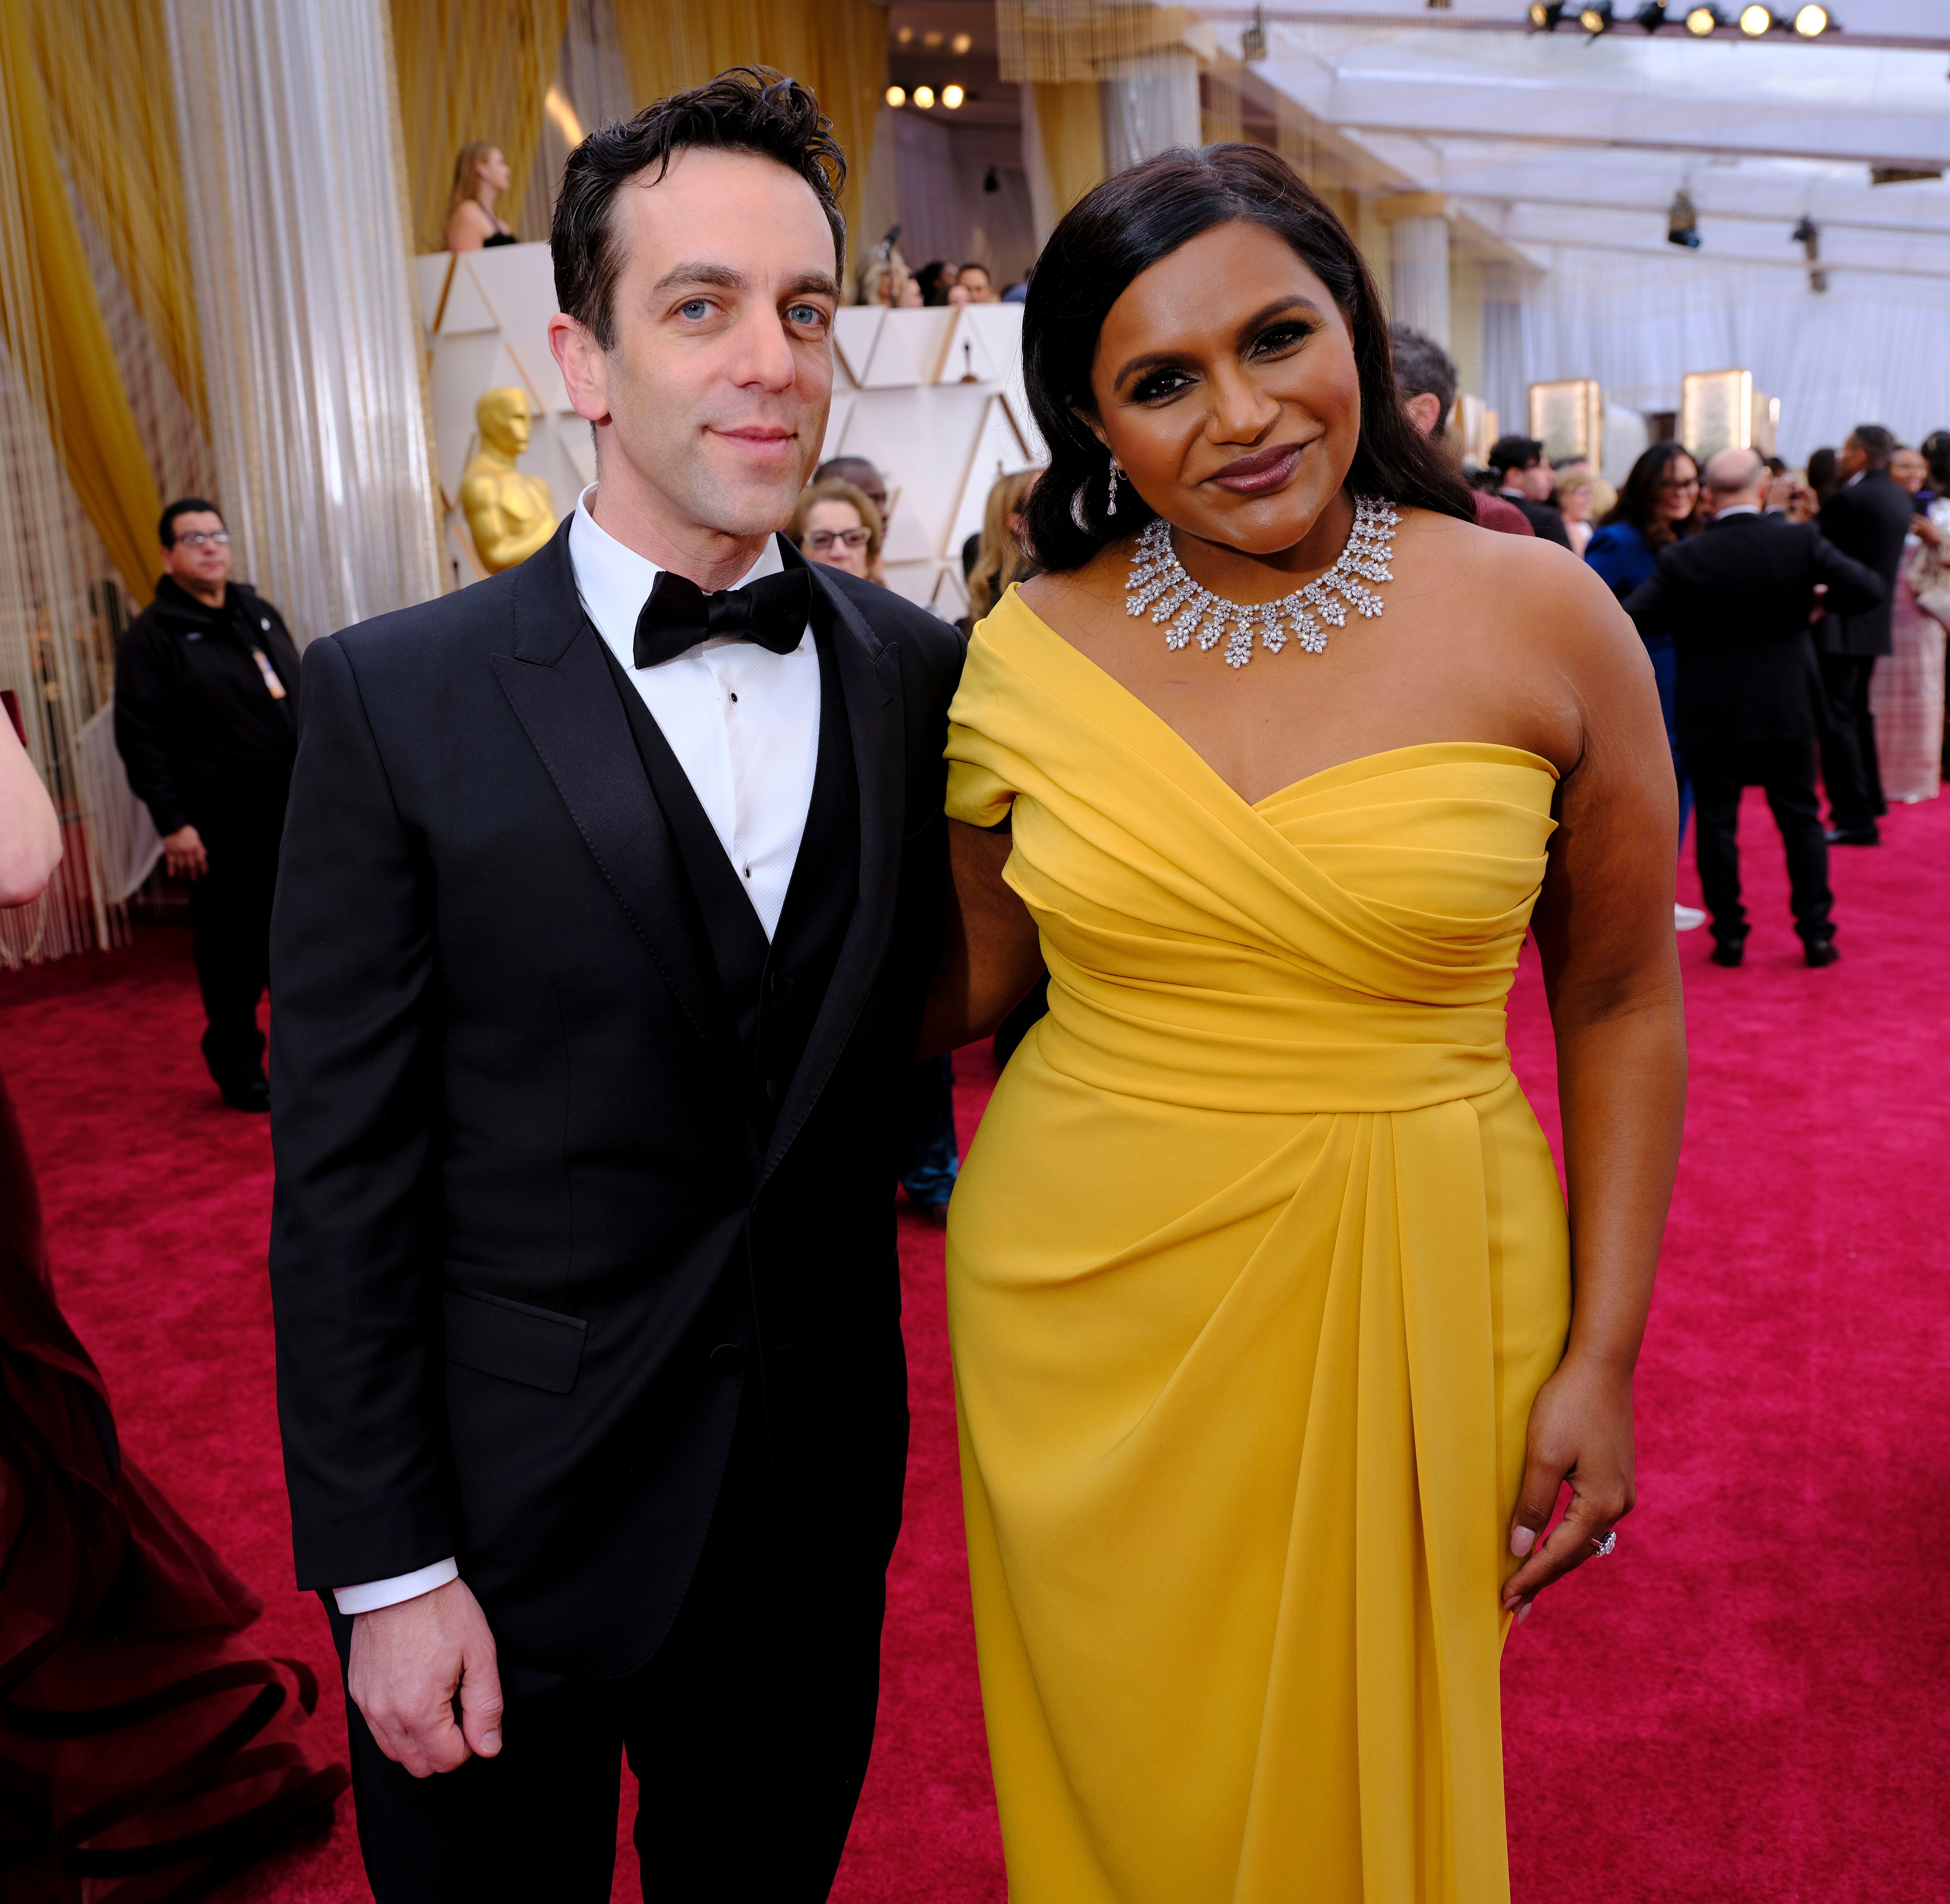 Mindy Kaling and B.J. Novak Oscars 2020: Pair Reunites on Red Carpet